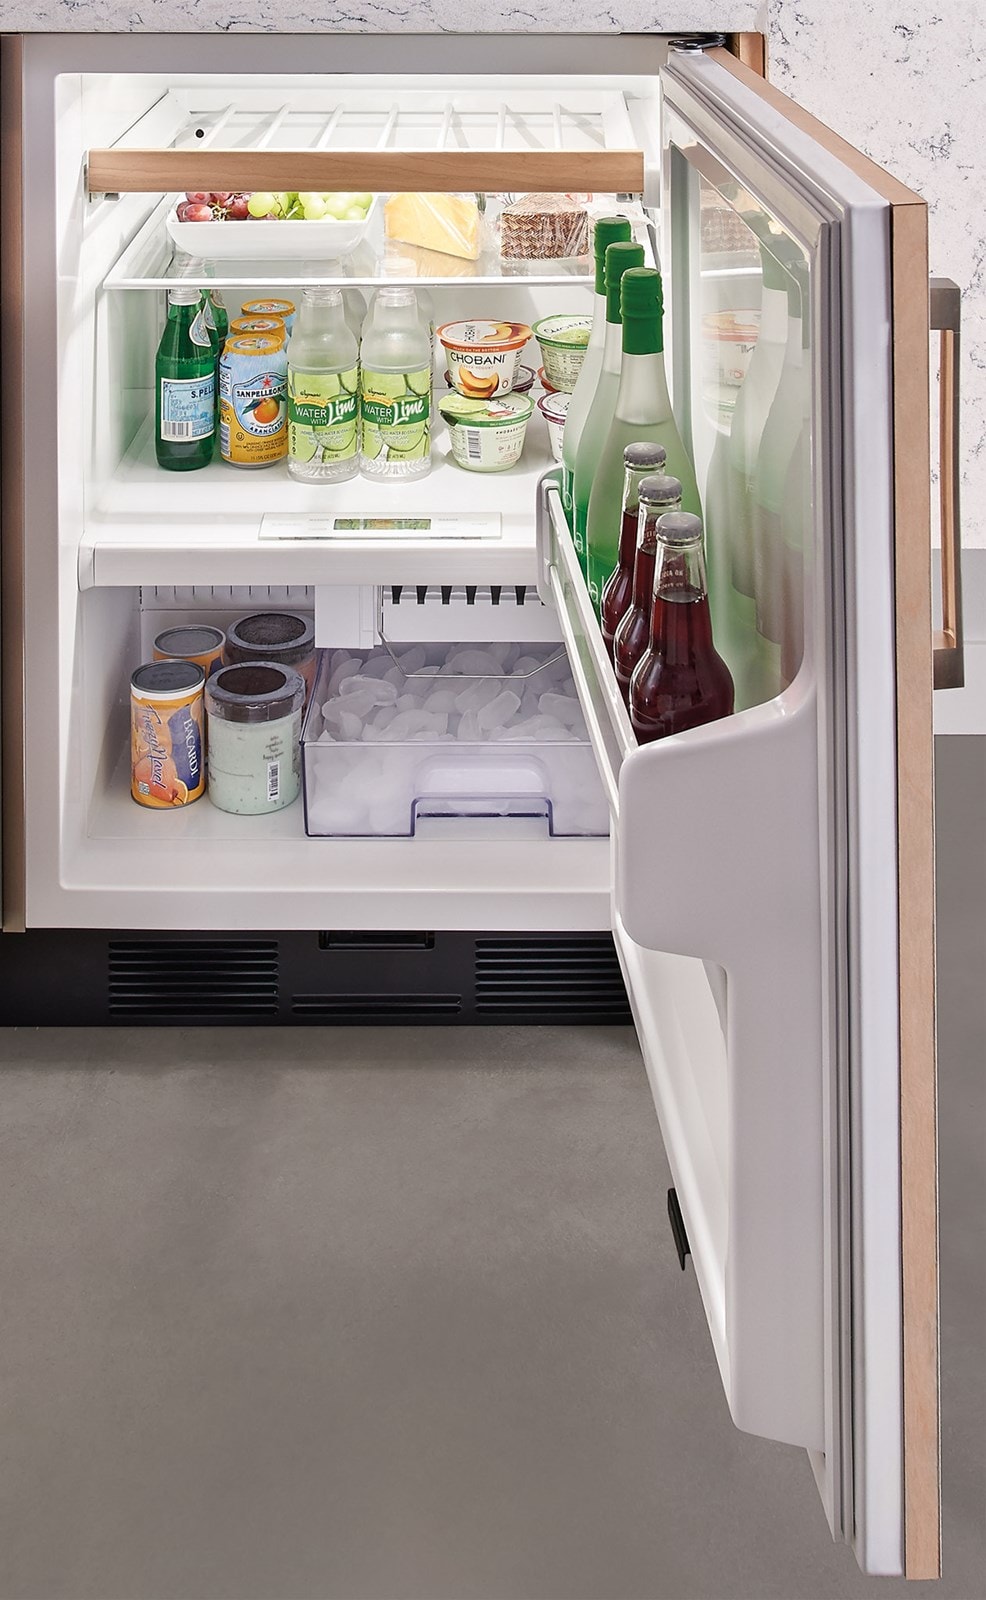 SubZero Legacy Model 24" Undercounter Refrigerator/Freezer with Ice